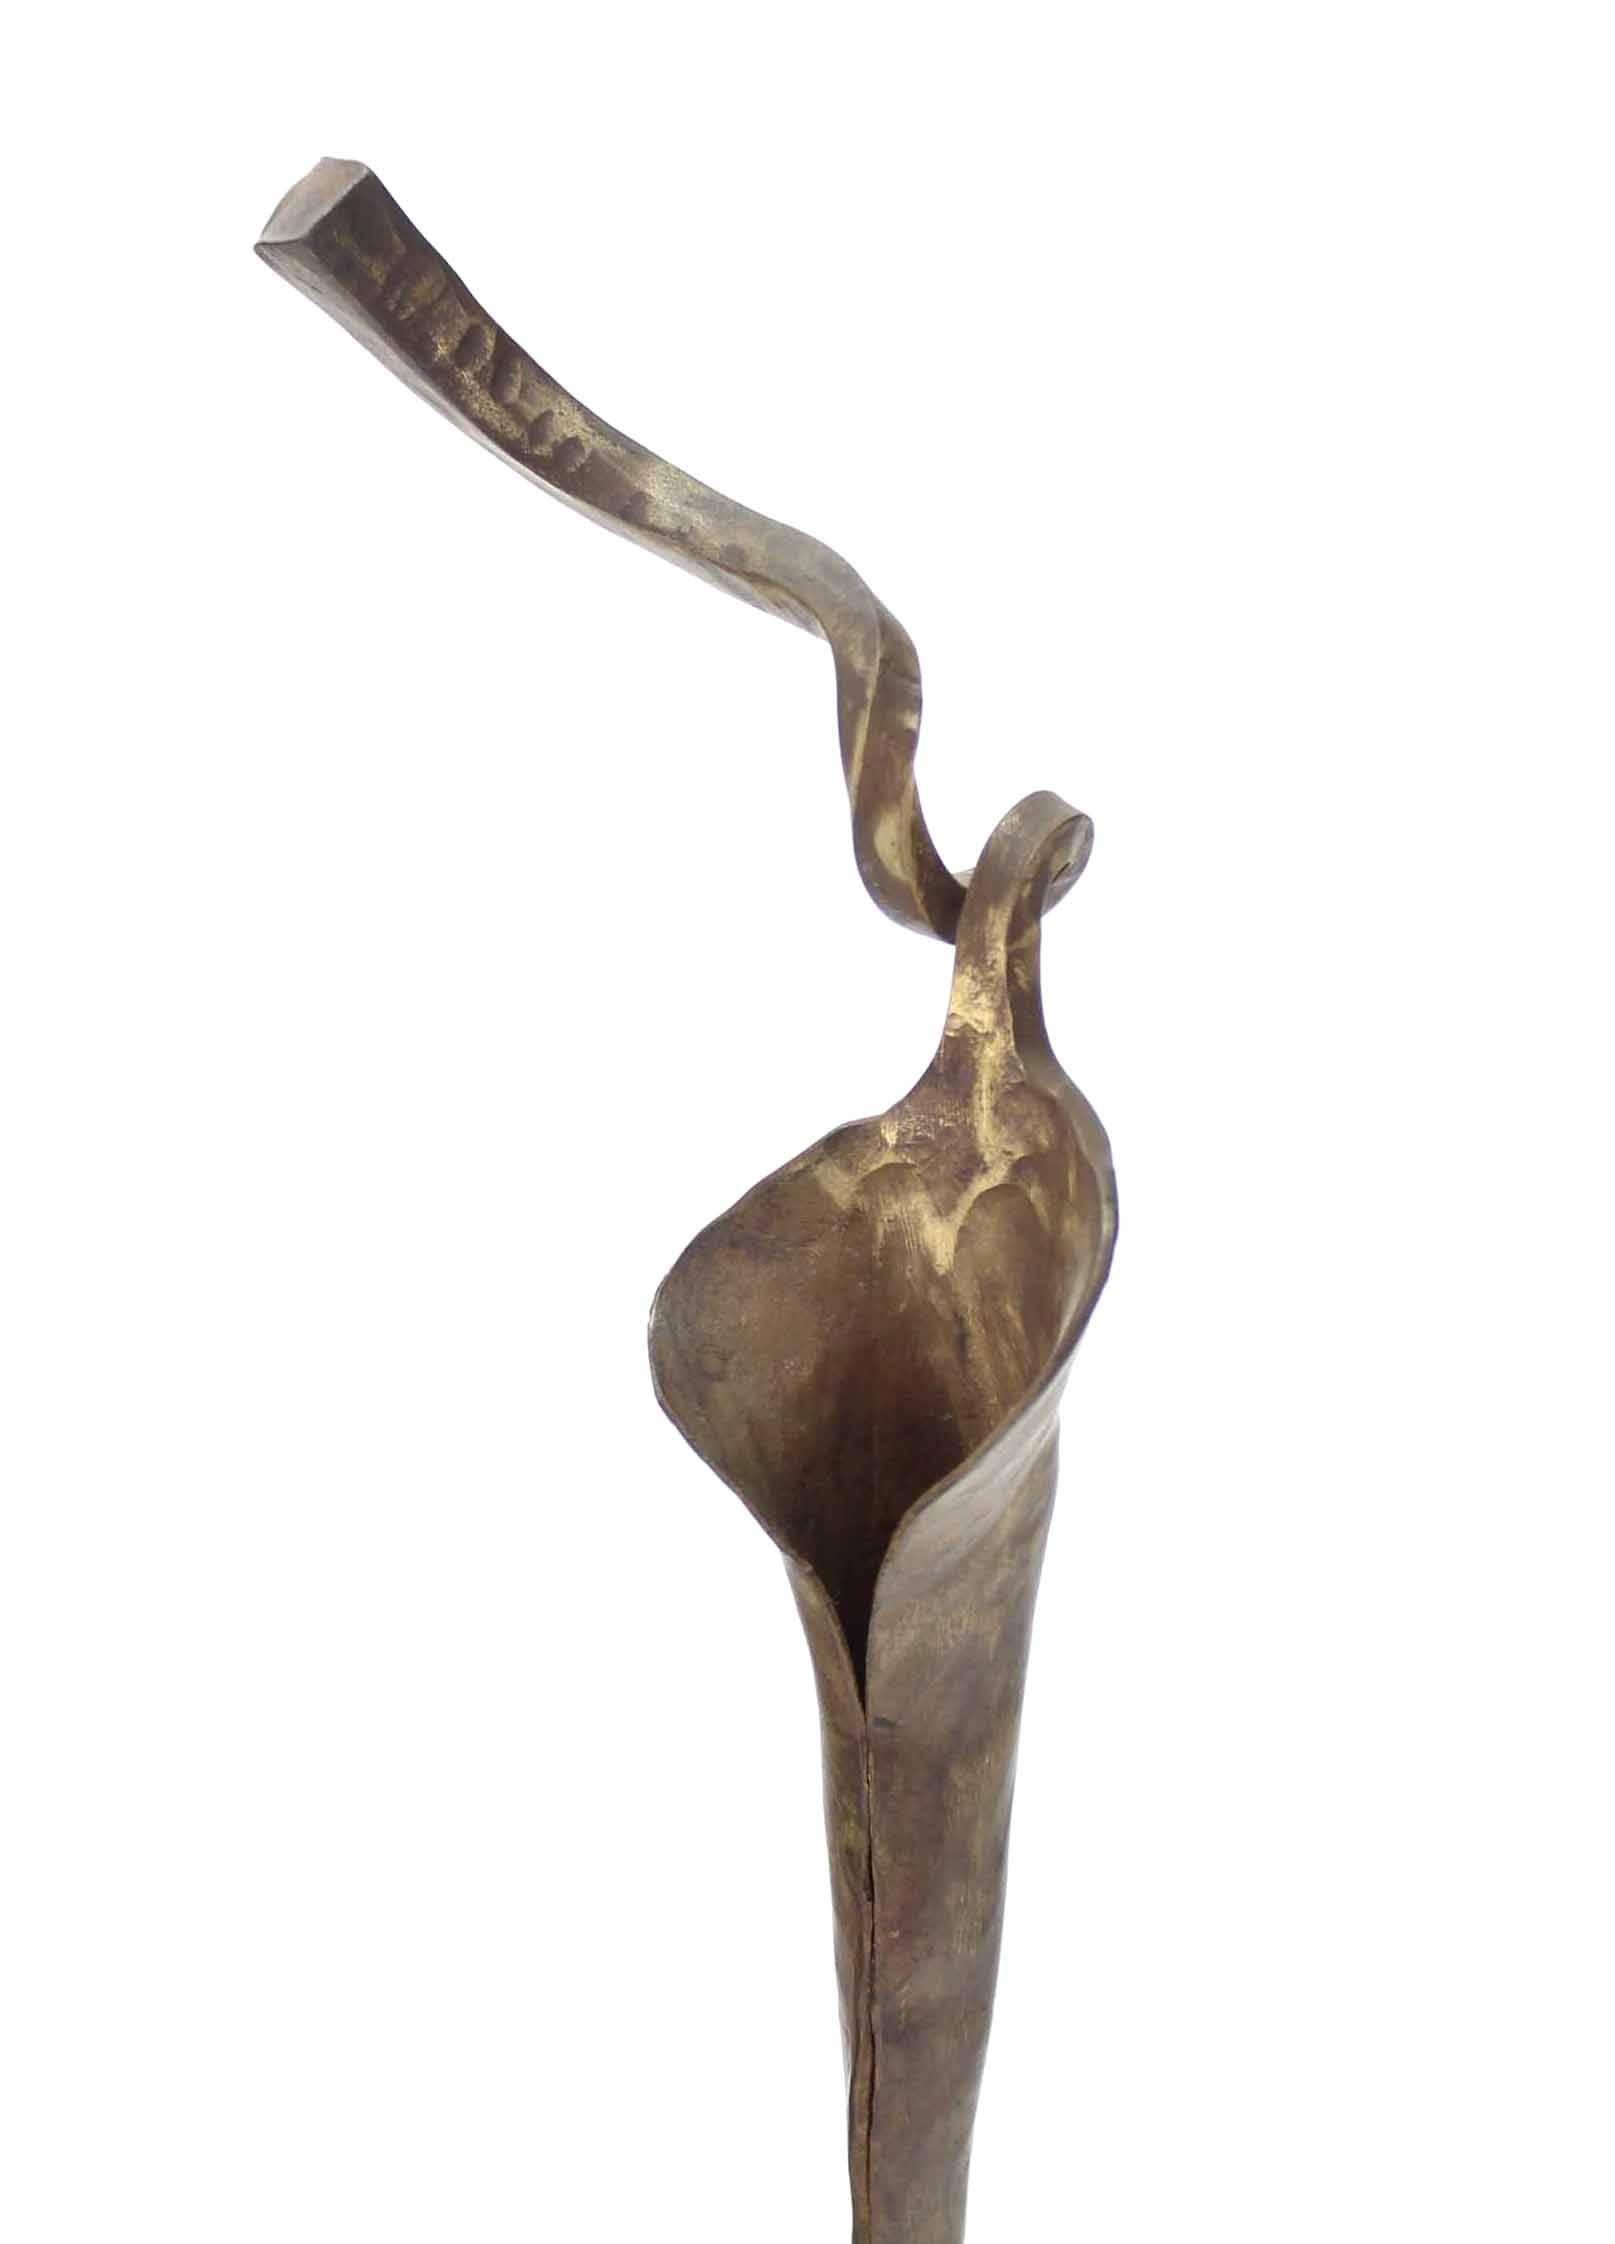 American Hammered Bronze Candle Holder Stick